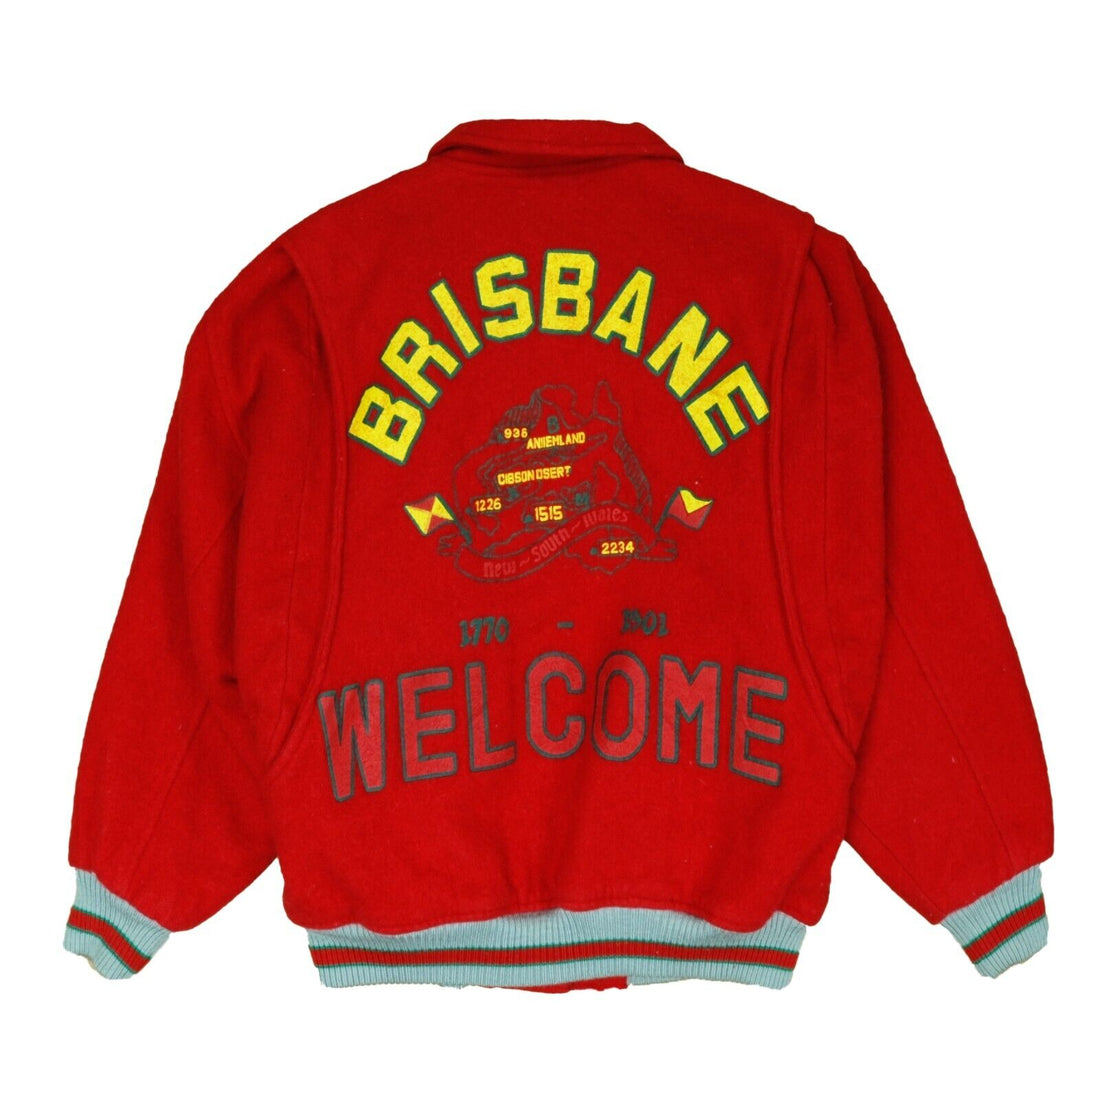 Vintage Brisbane Australia Wool Varsity Jacket Size Medium Red